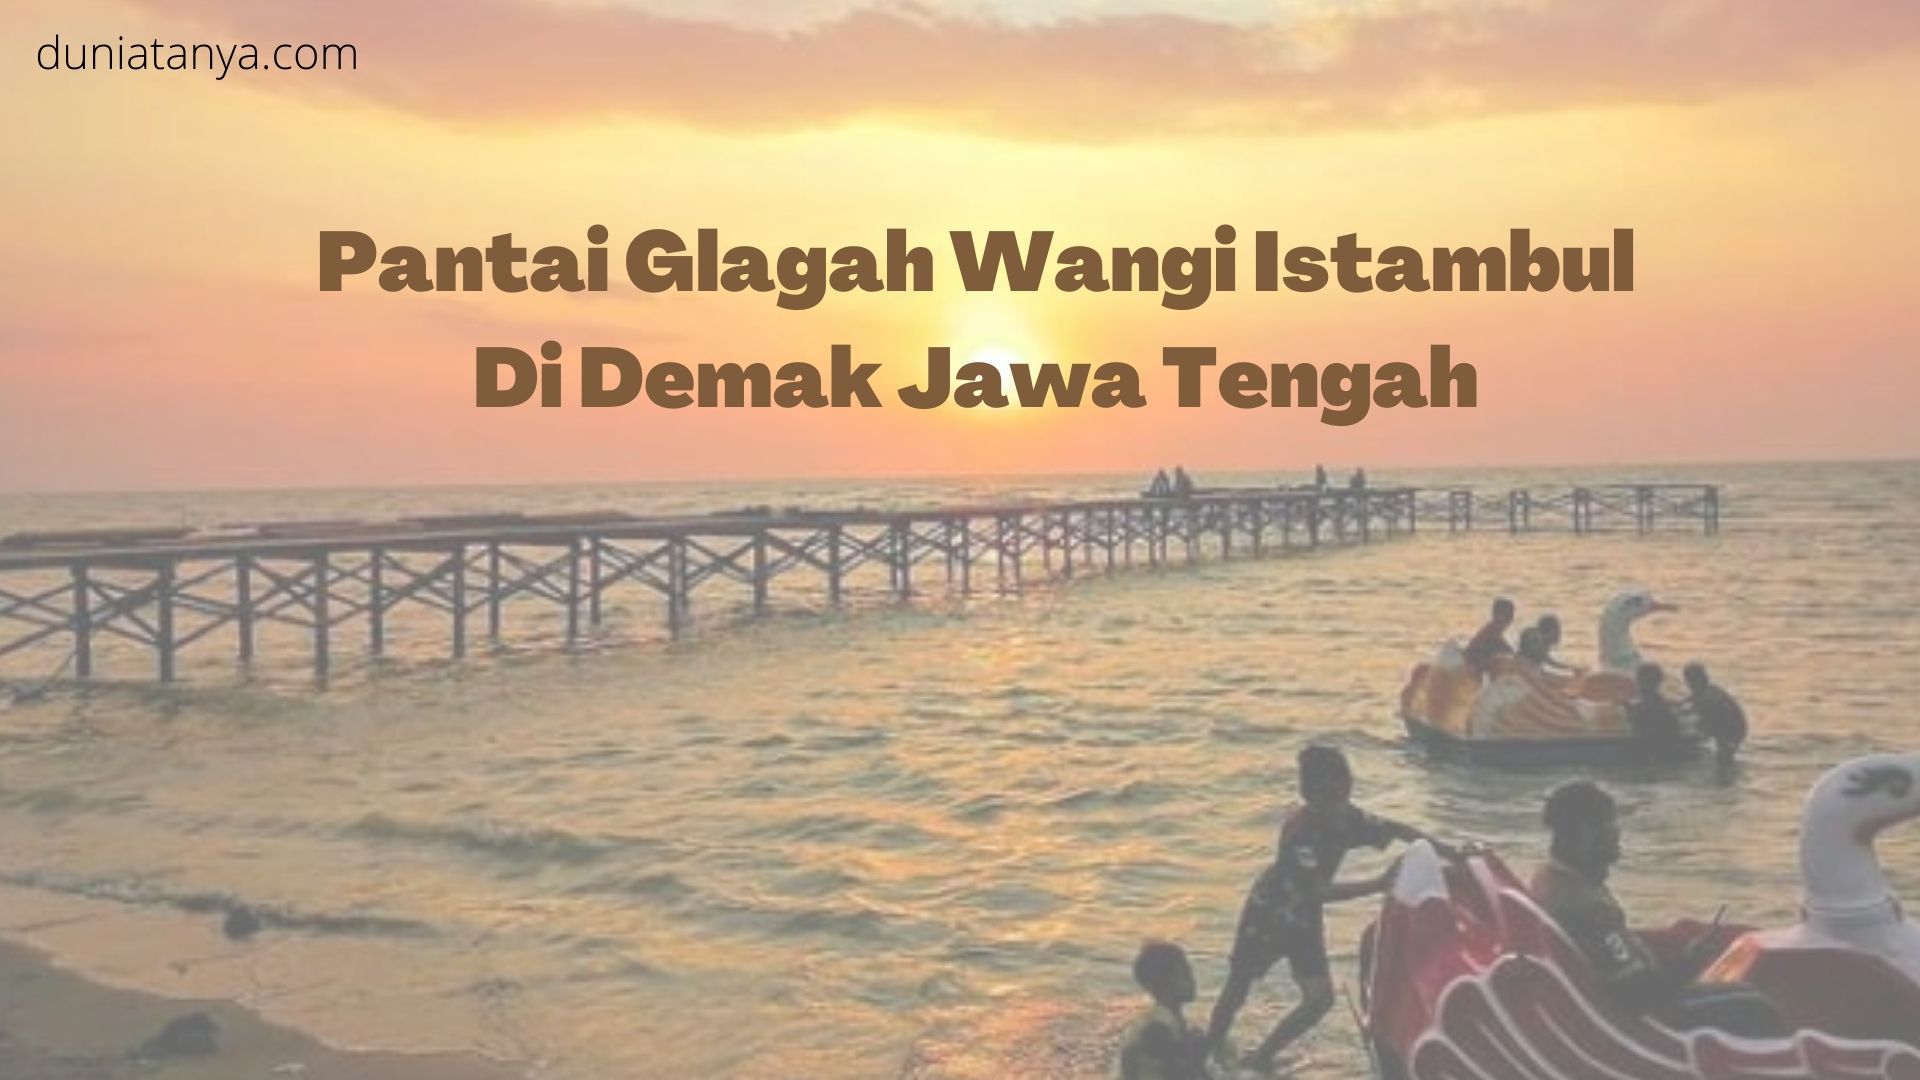 You are currently viewing Pantai Glagah Wangi Istambul Di Demak Jawa Tengah